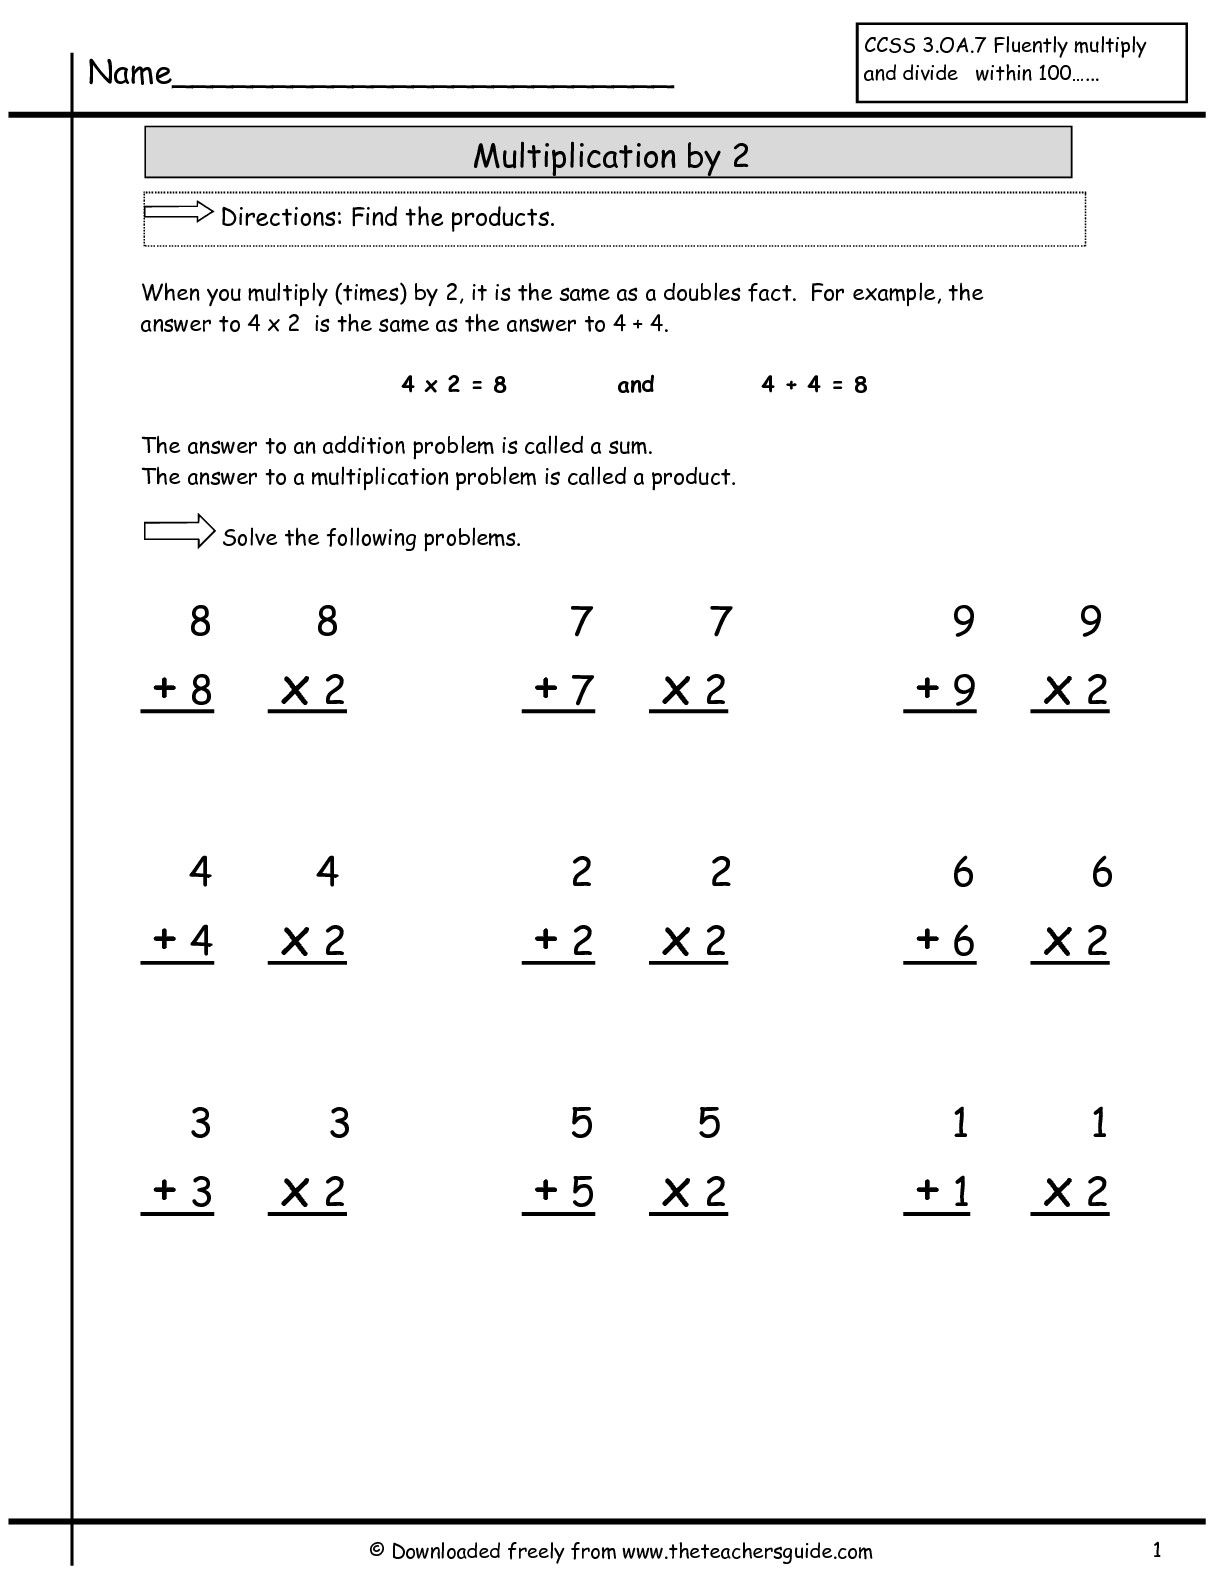 Multiplication Worksheet | Cc Math | Multiplication throughout Multiplication Worksheets X2